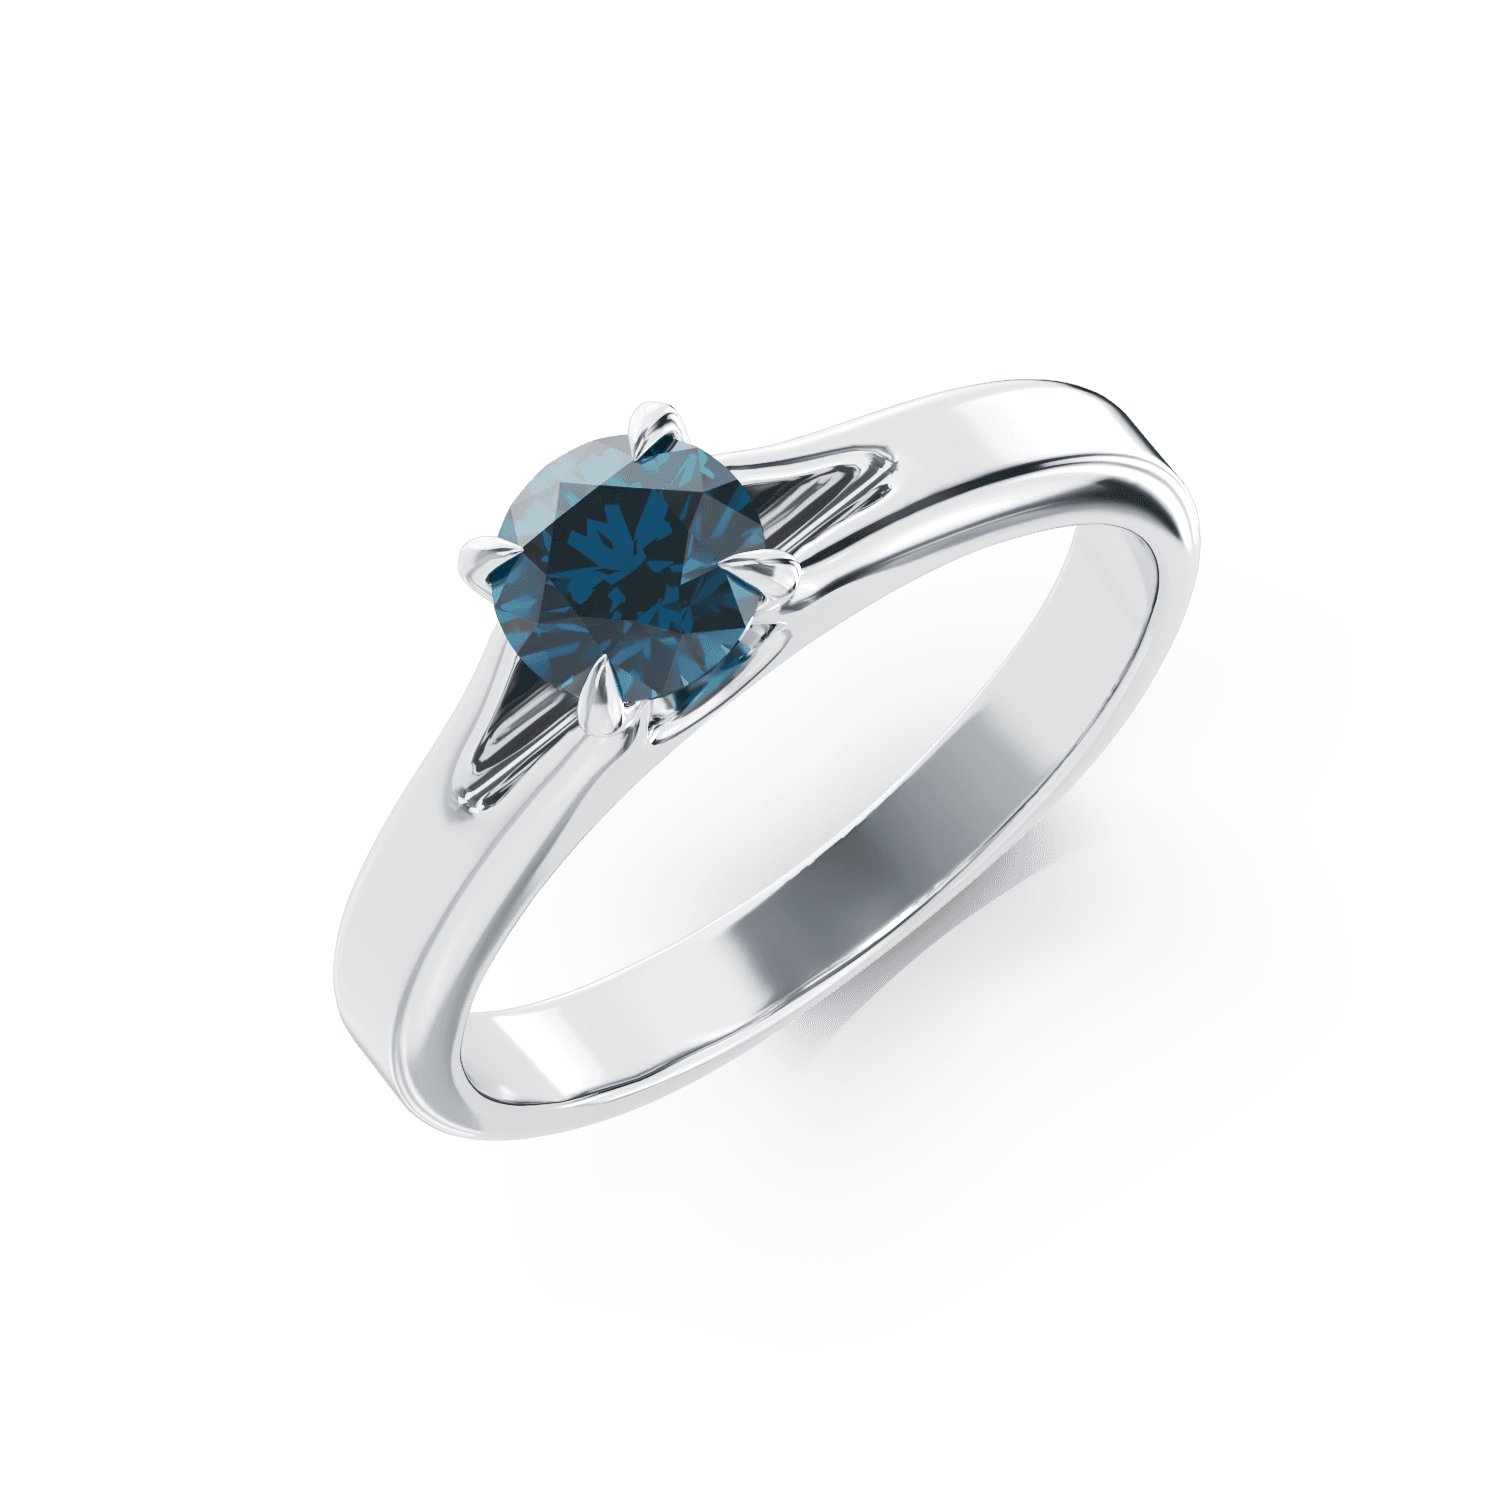 Inel de logodna din aur alb de 18K cu un diamant solitaire albastru de 0.55ct